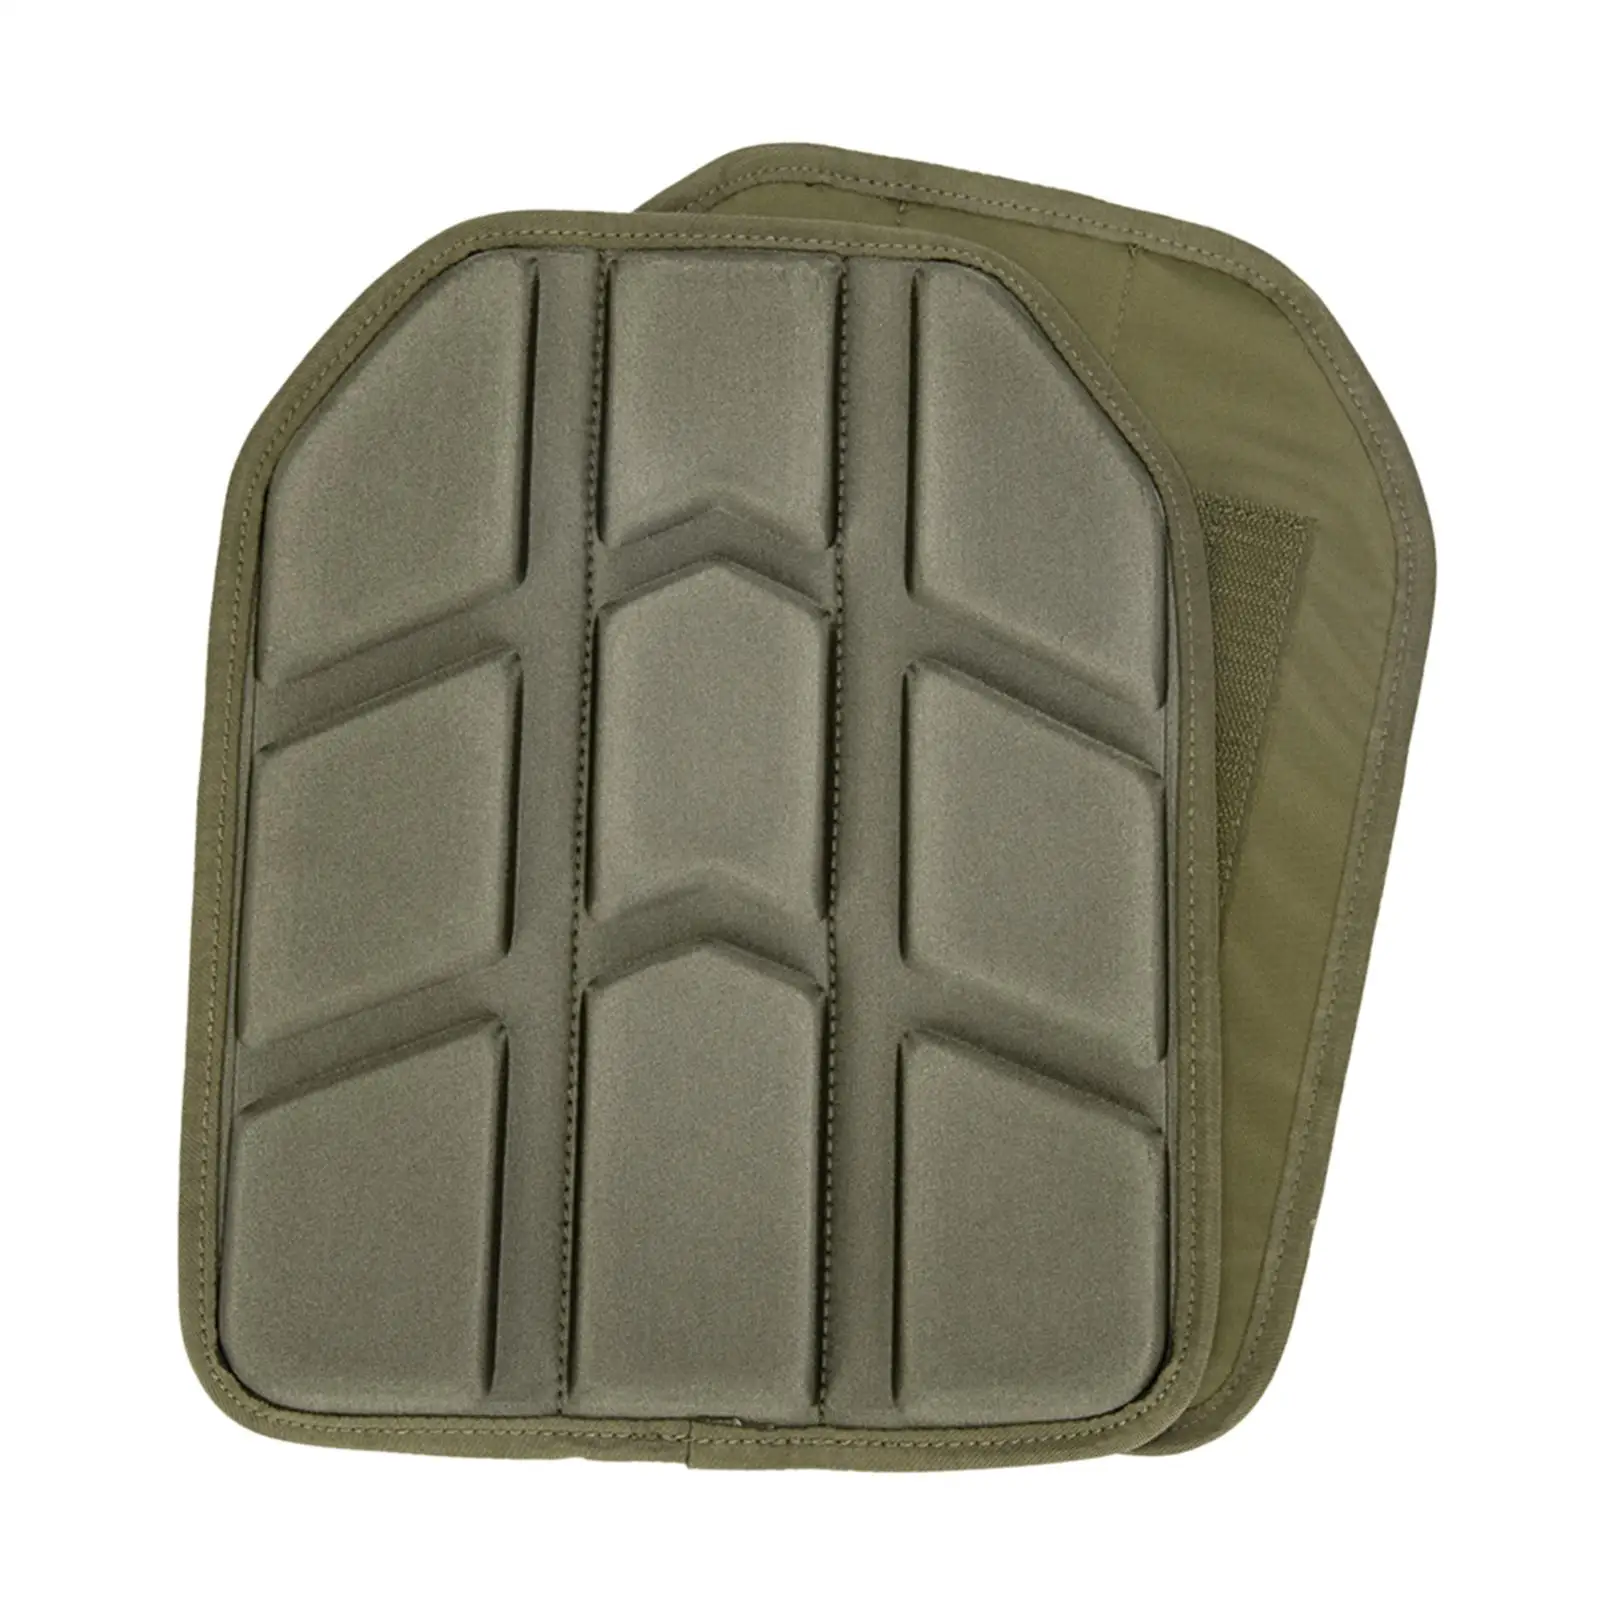 2Piece Shock Plates Protective EVA Foam Body Carrier Vest for Airsoft Combat